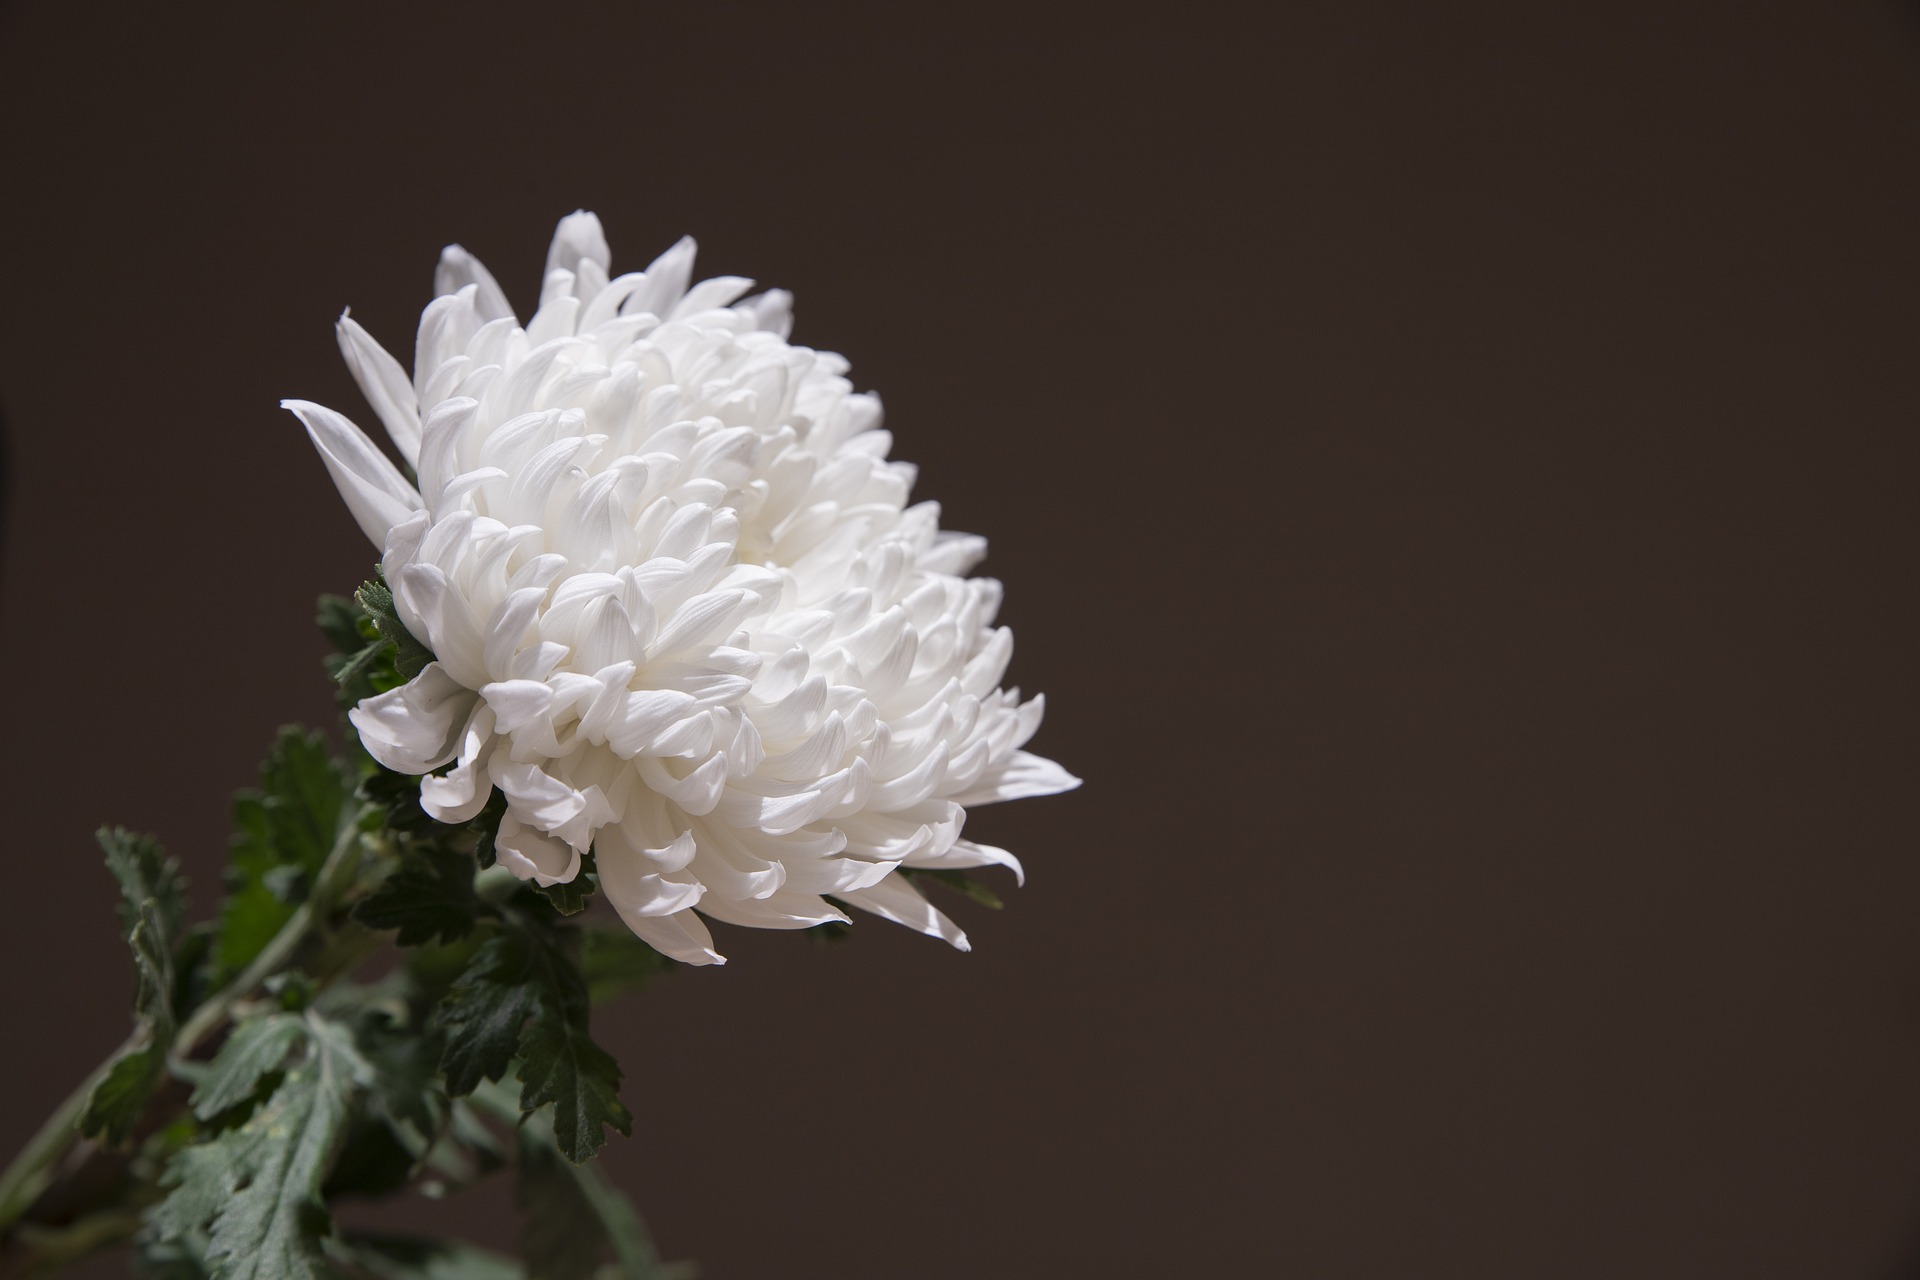 chrysanthemum-g2f7cac74a_1920.jpg